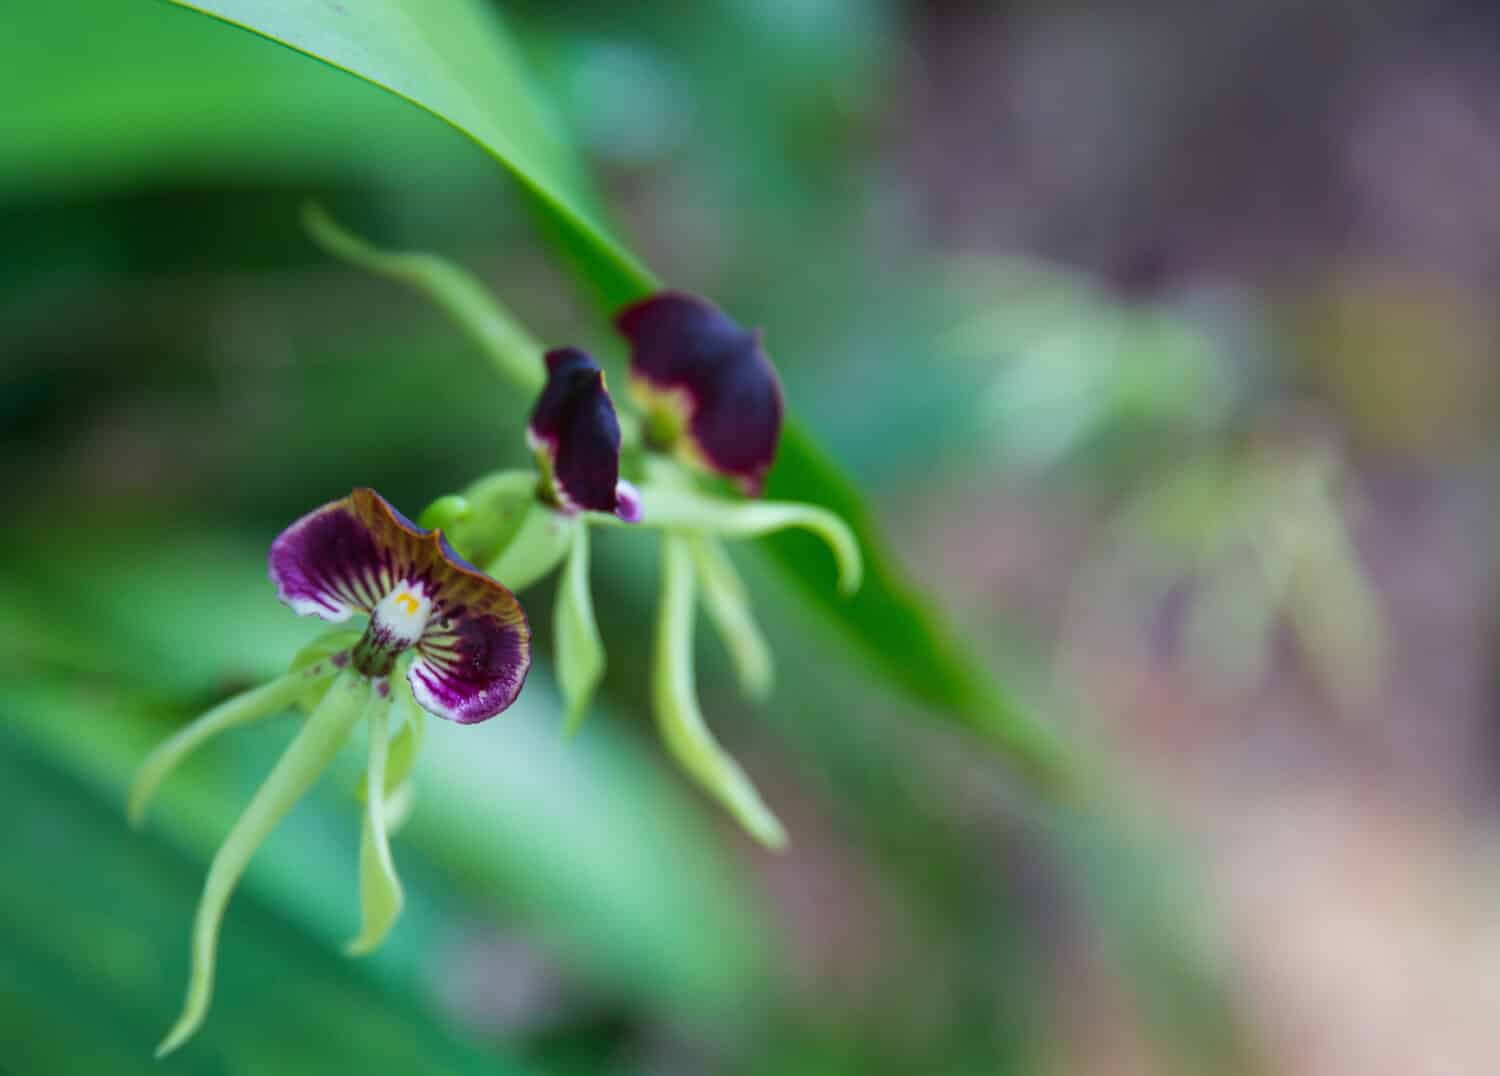 Belize National Flower - the Black Orchid